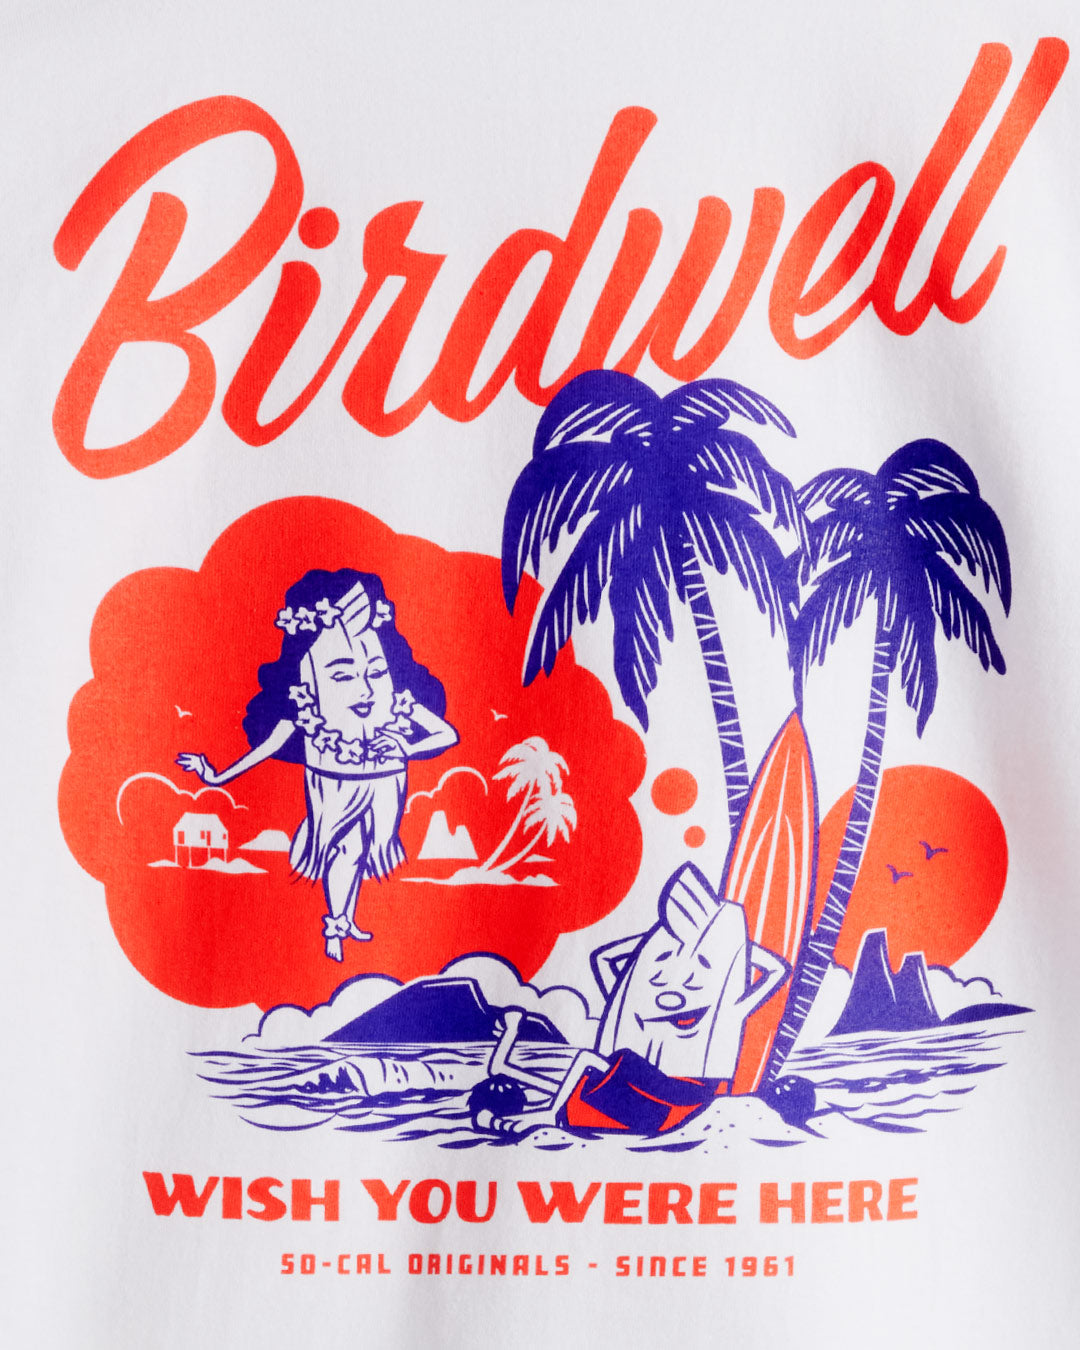 Birdwell Daydreamin' Birdie T-Shirt - White - Sun Diego Boardshop